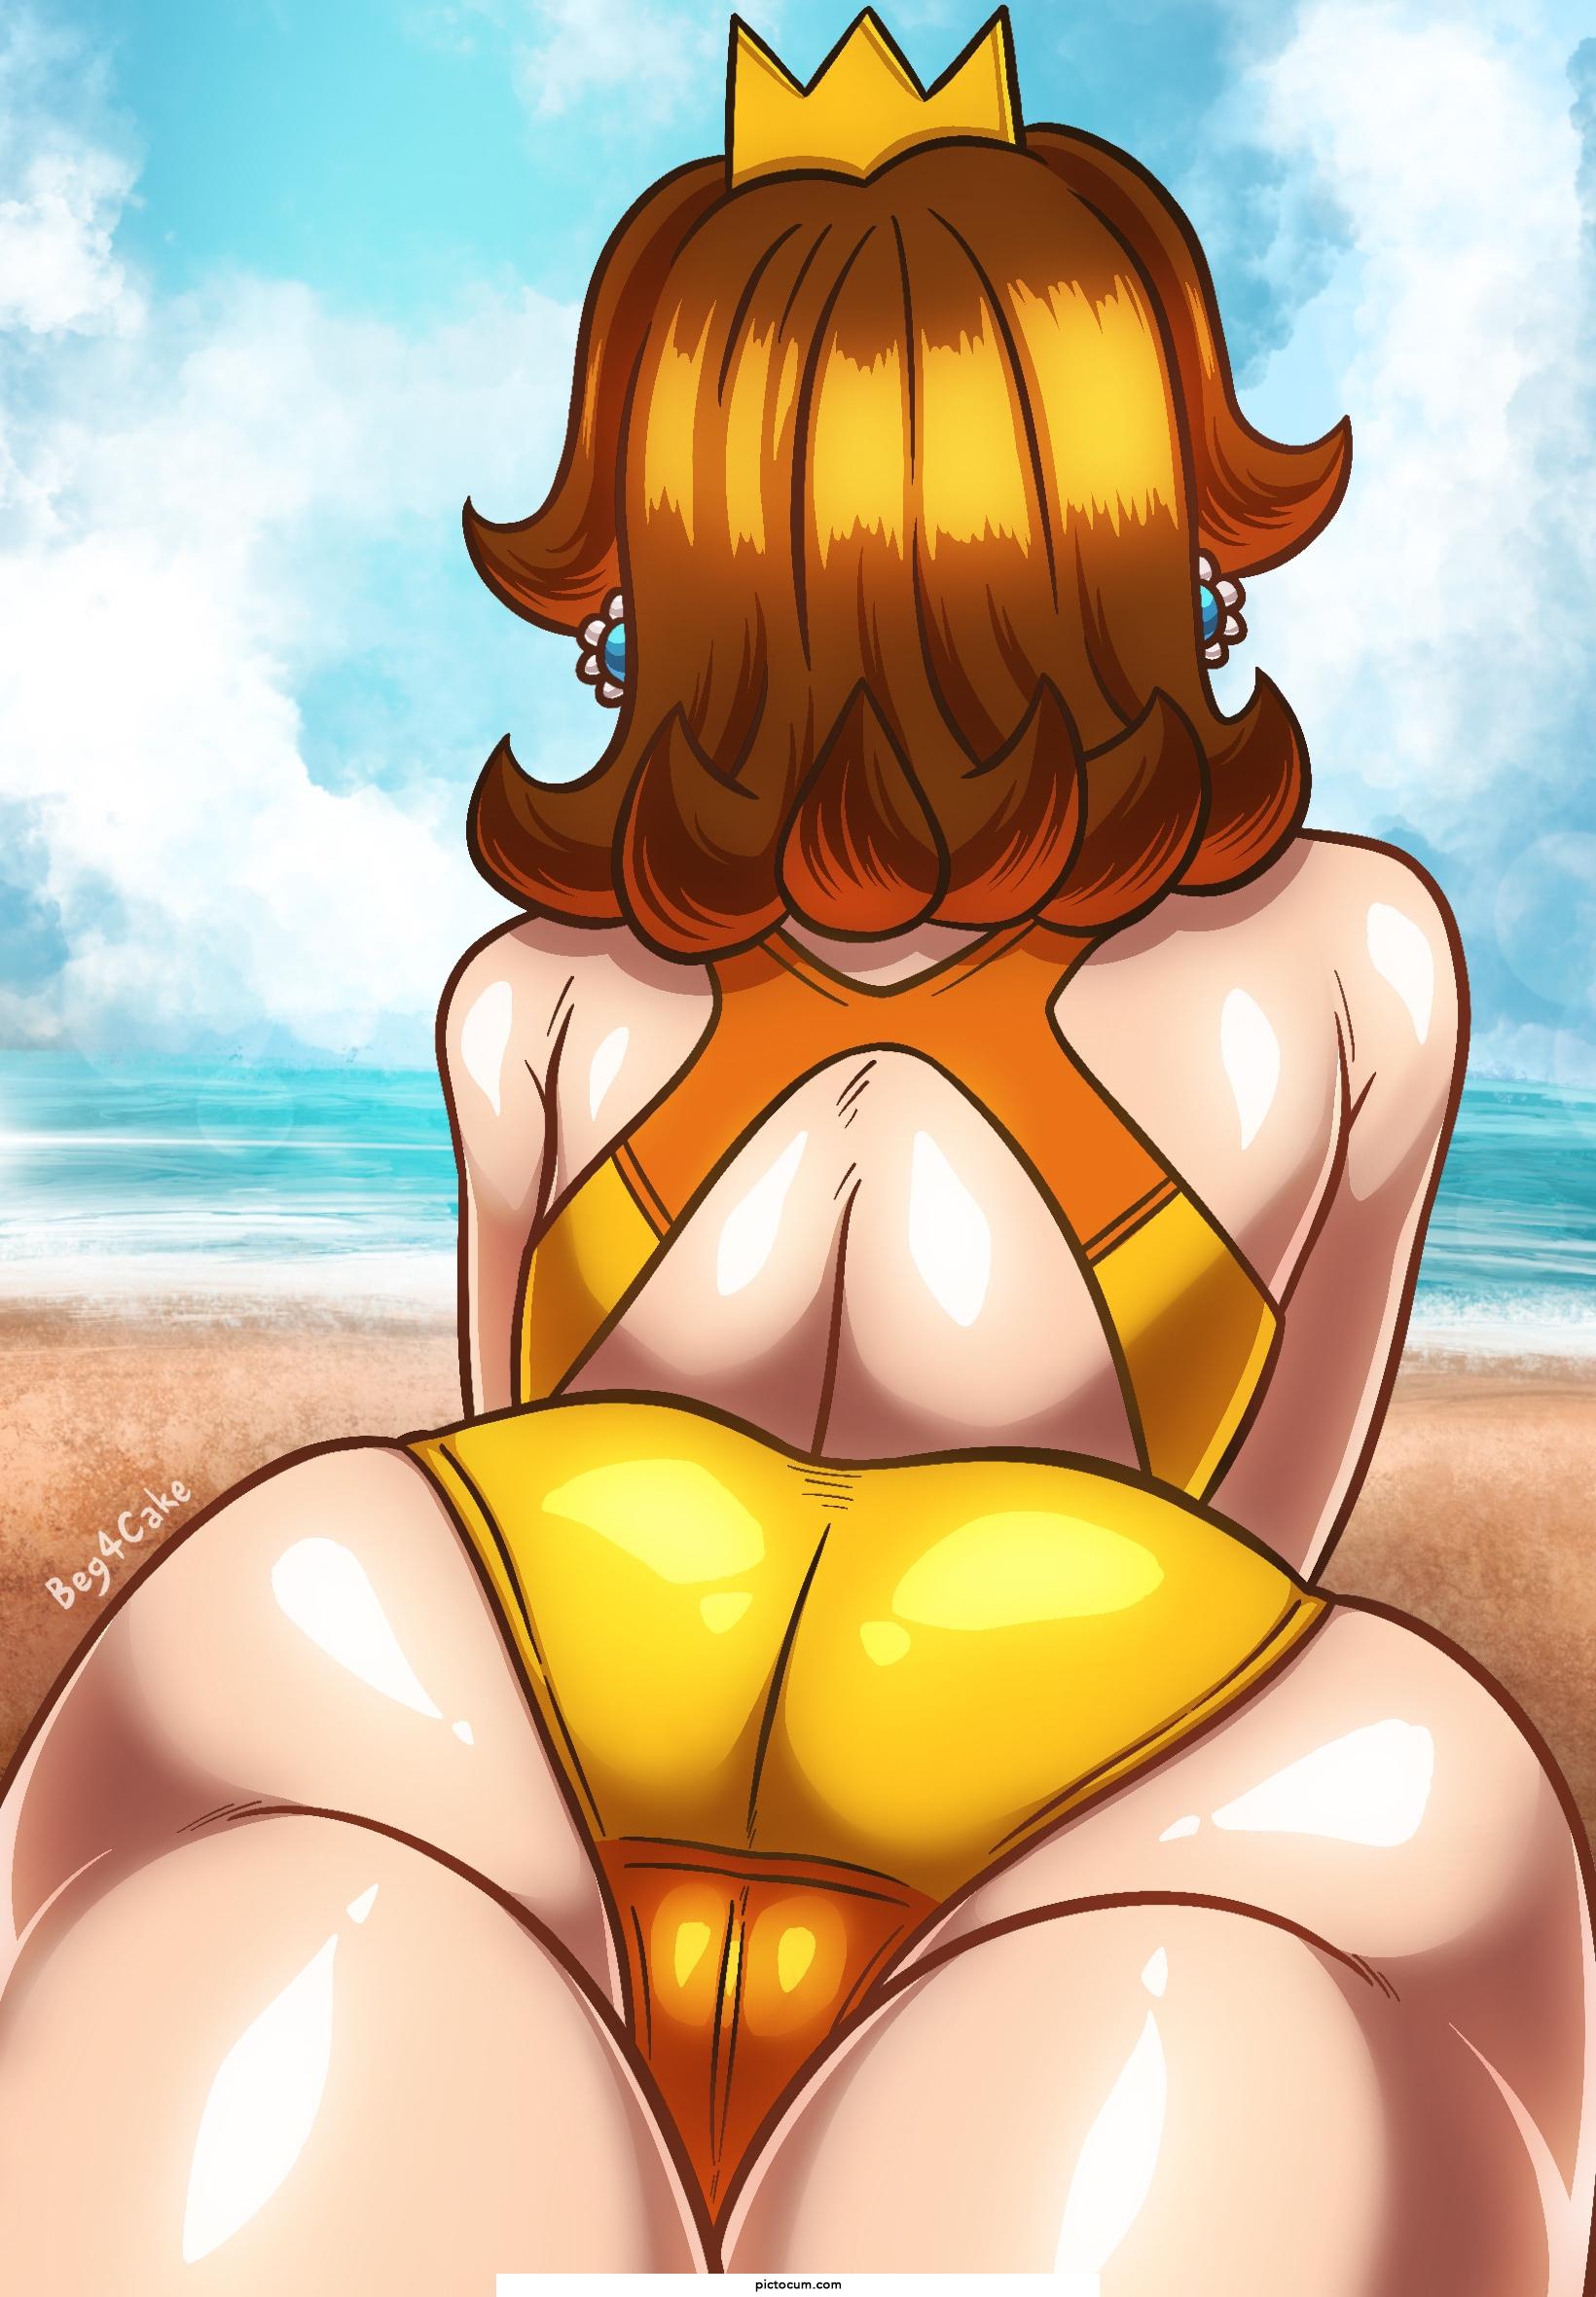 Daisy at the beach by